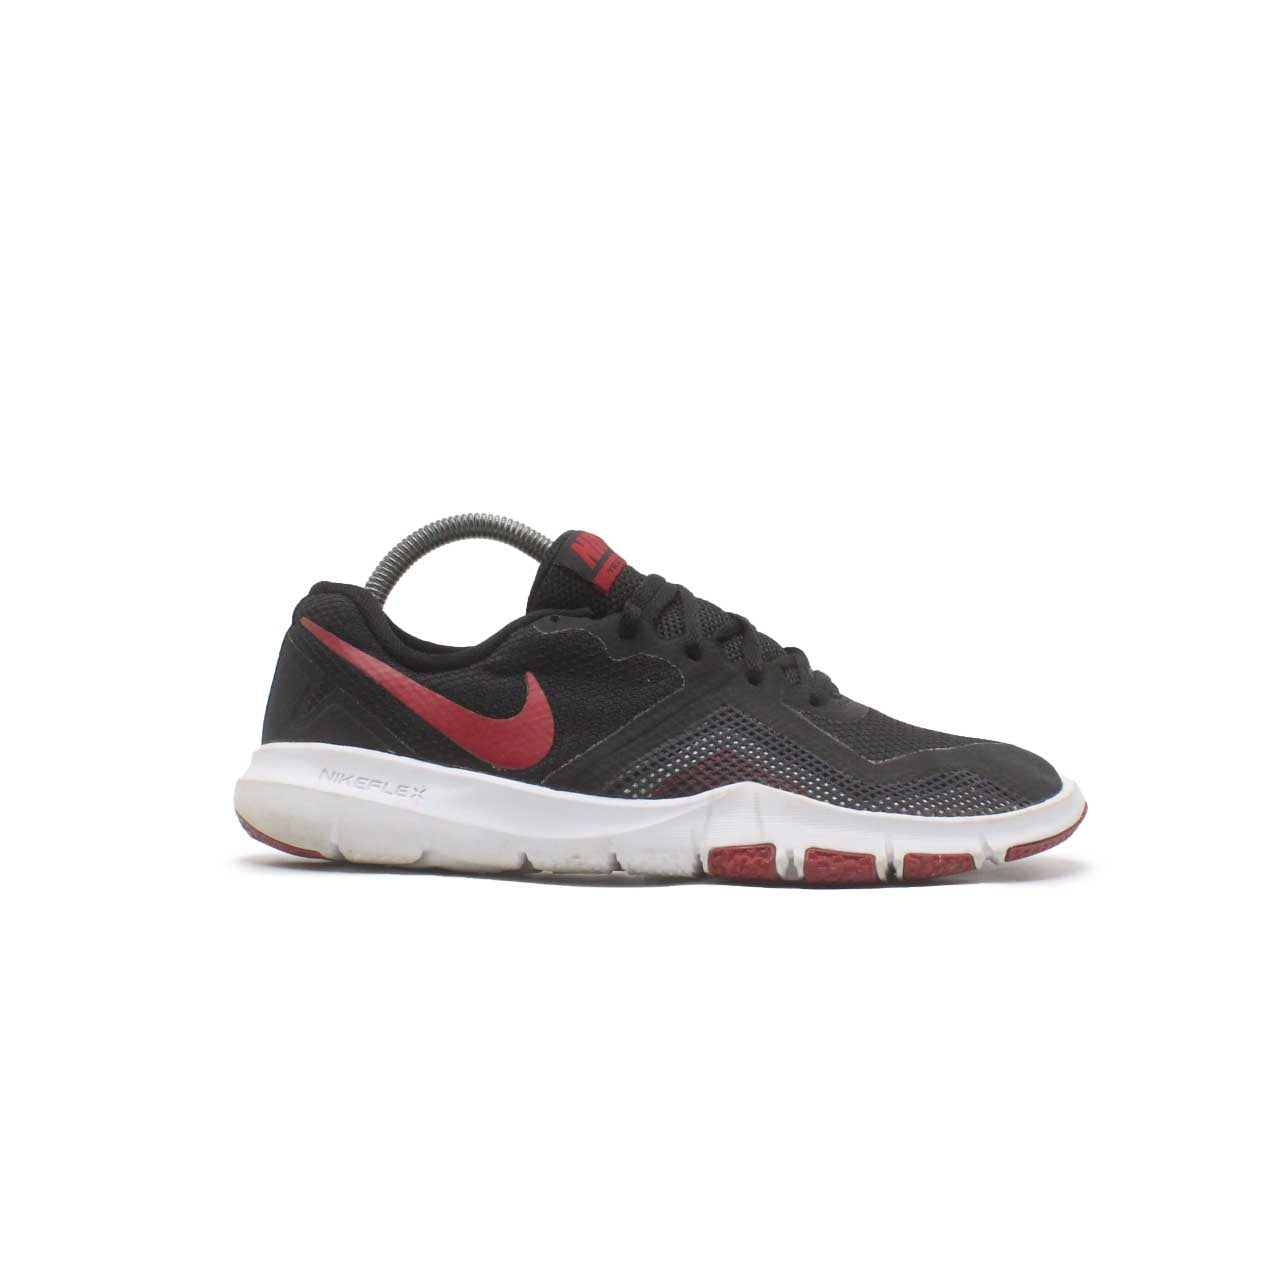 Nike Flex Control II Competition Running Shoe